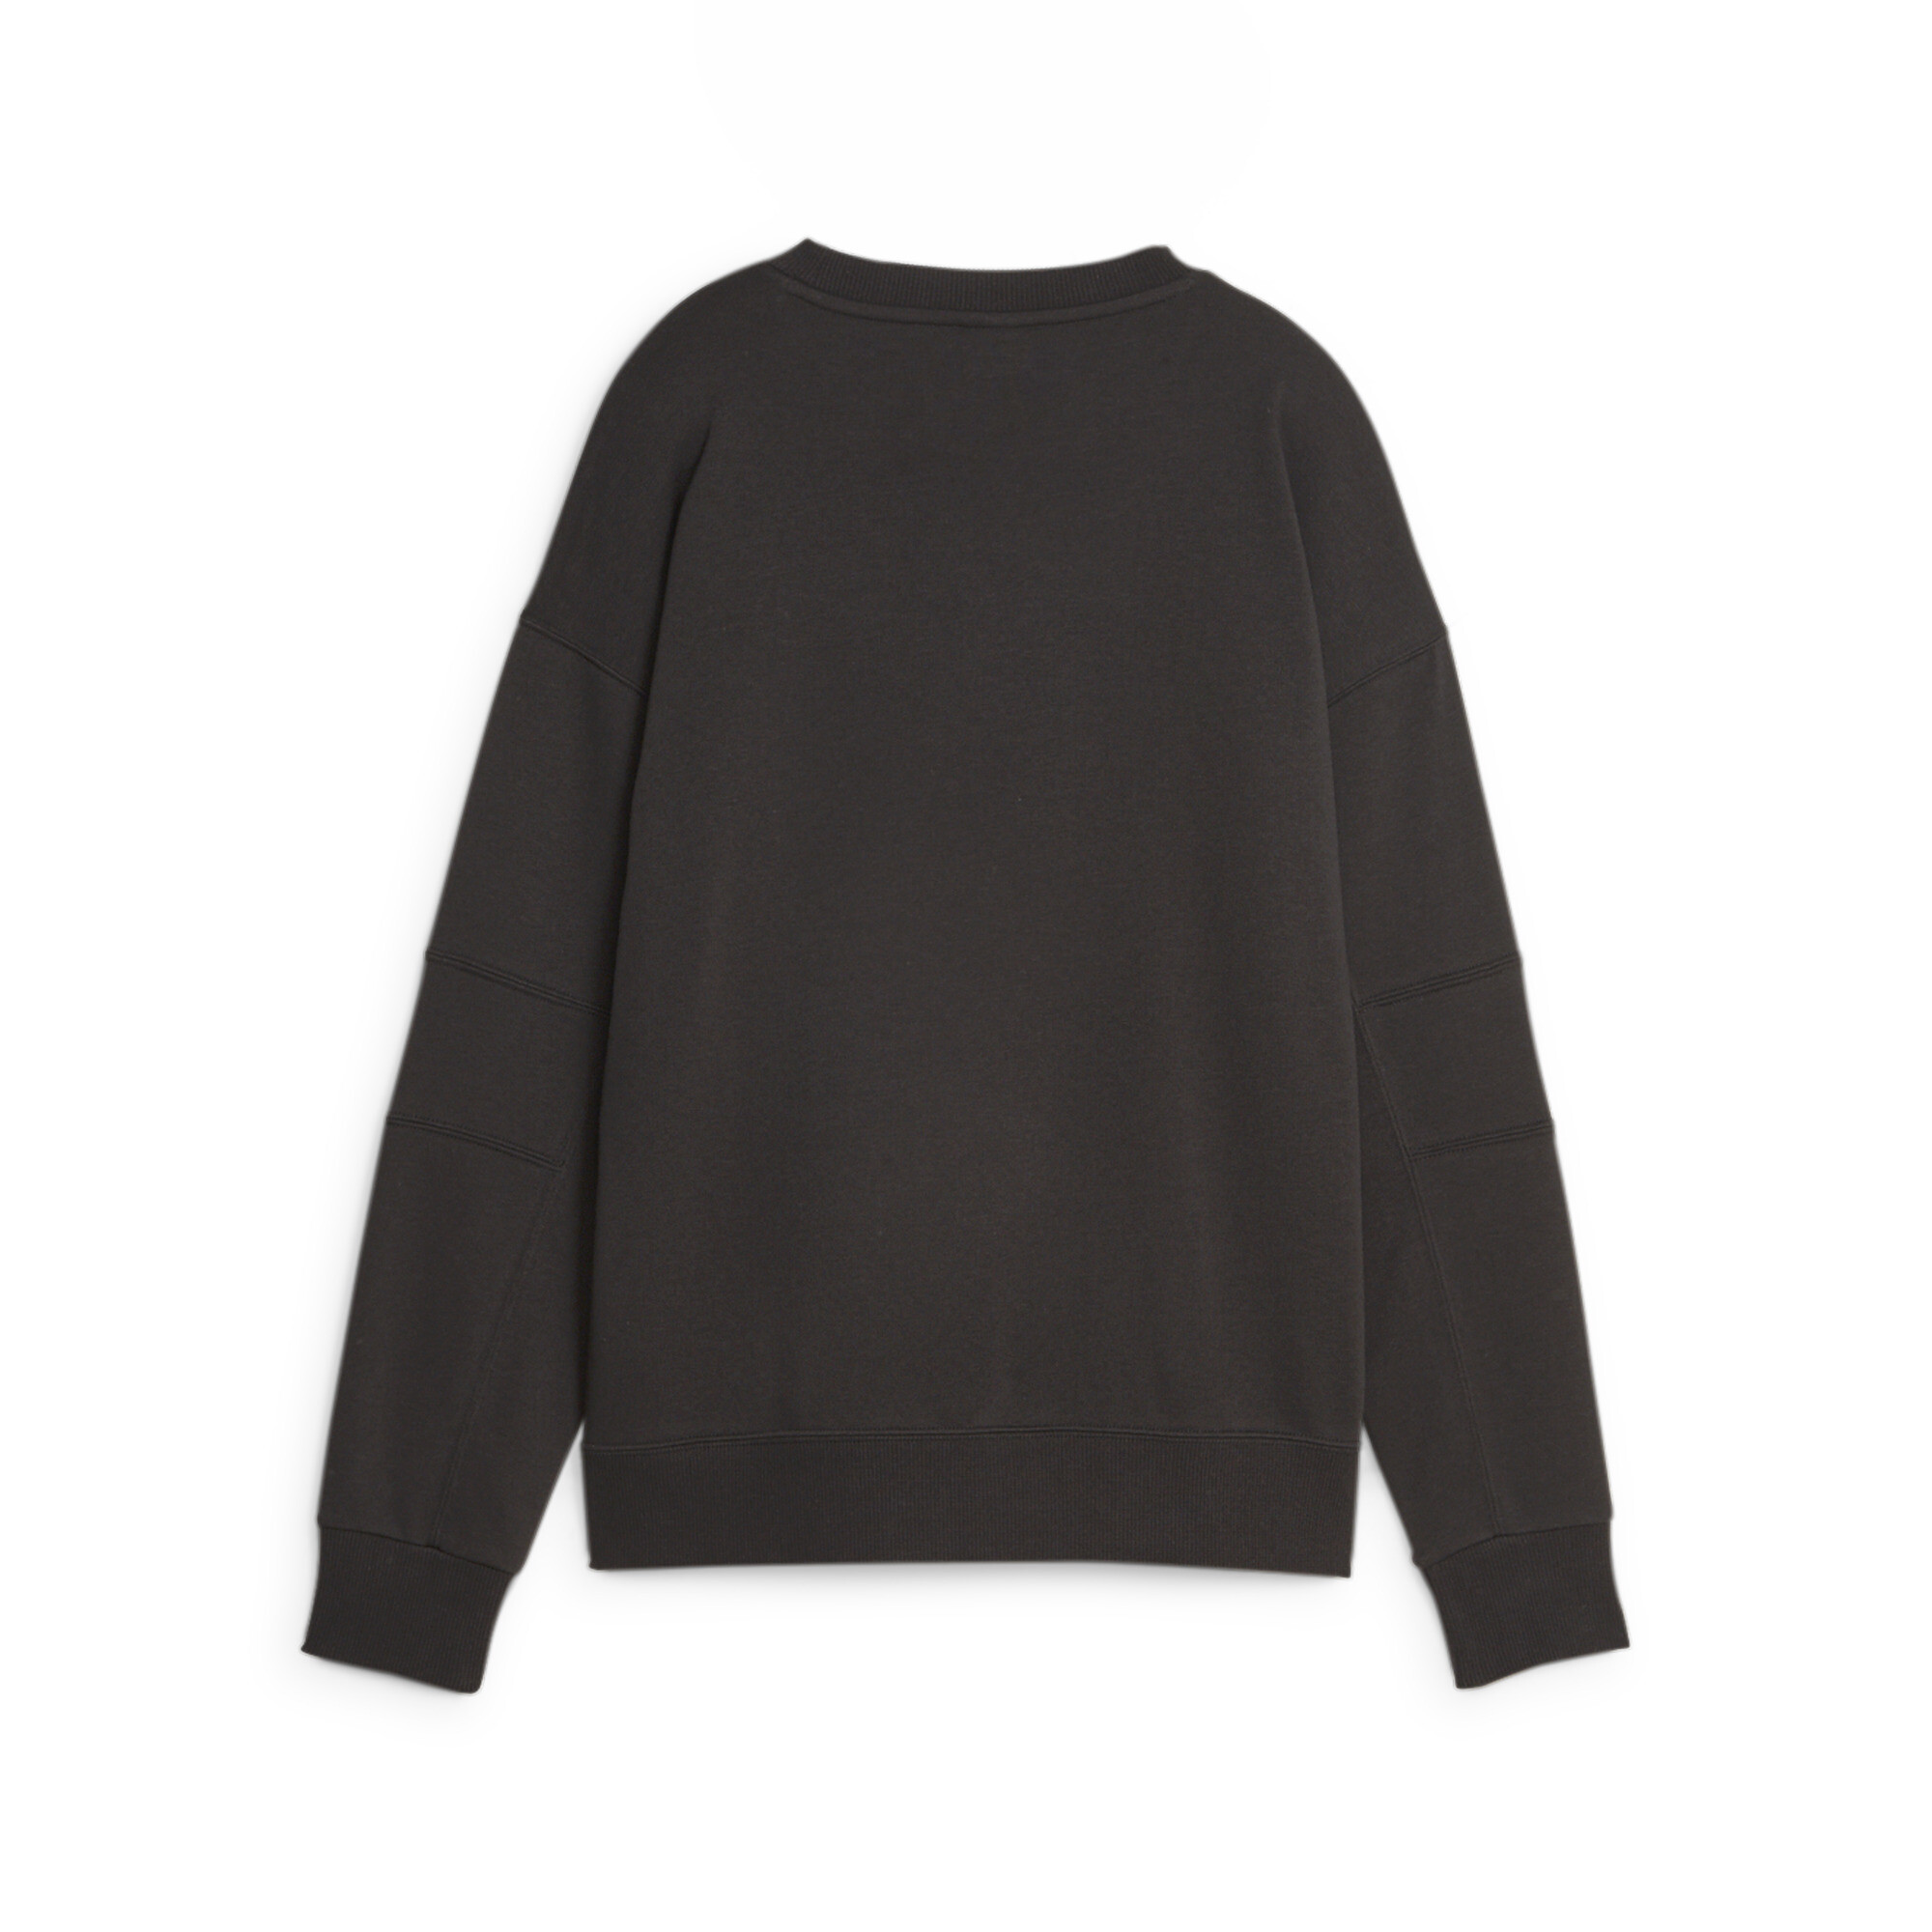 Women's PUMA TEAM Sweatshirt In Black, Size XS